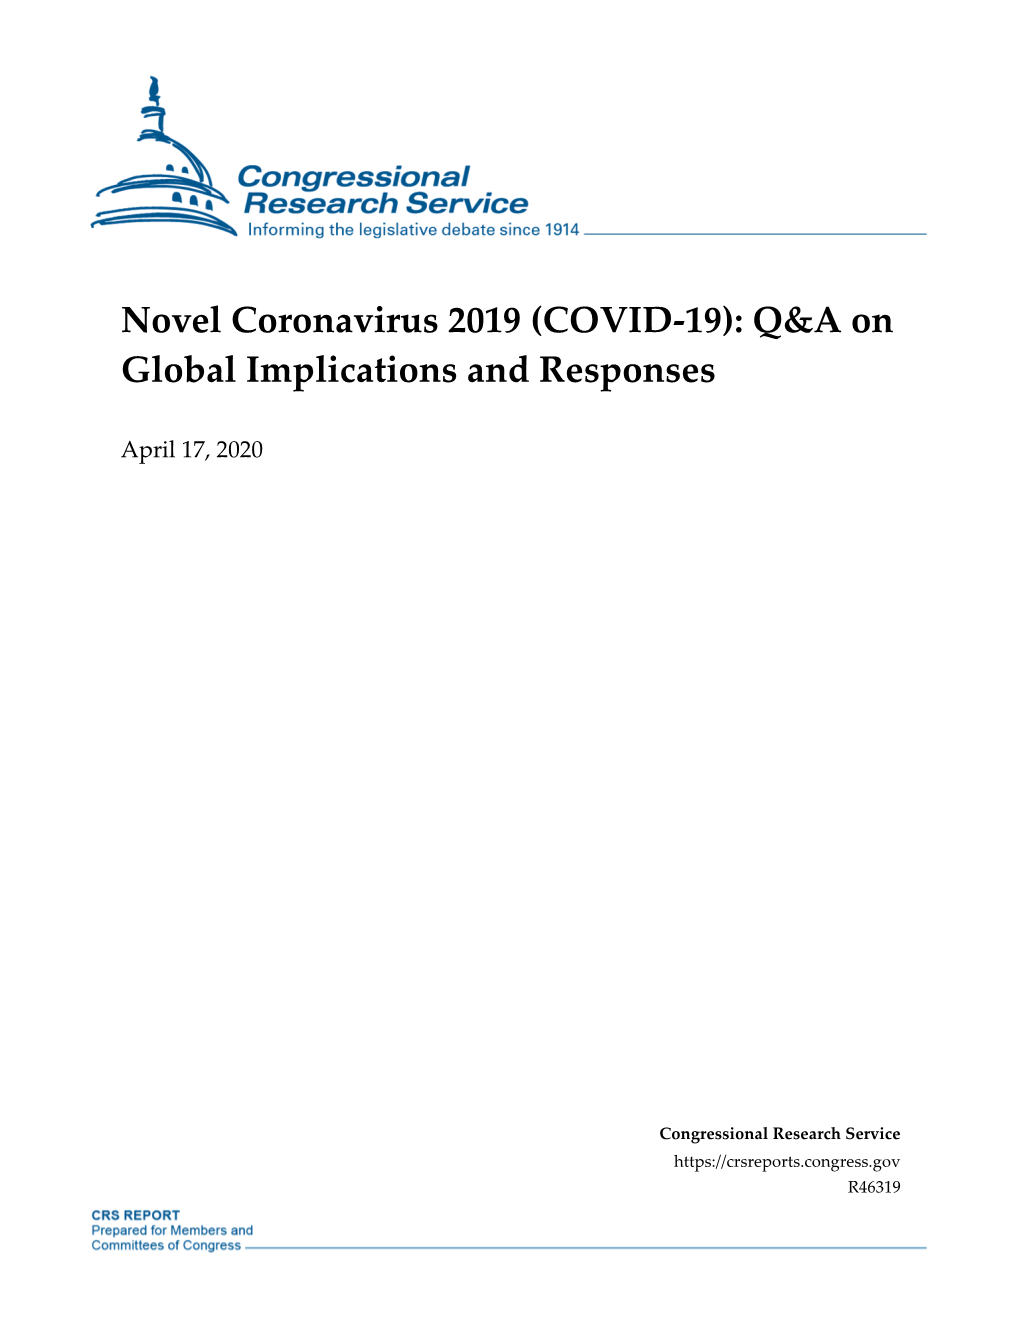 Novel Coronavirus 2019 (COVID-19): Q&A on Global Implications And